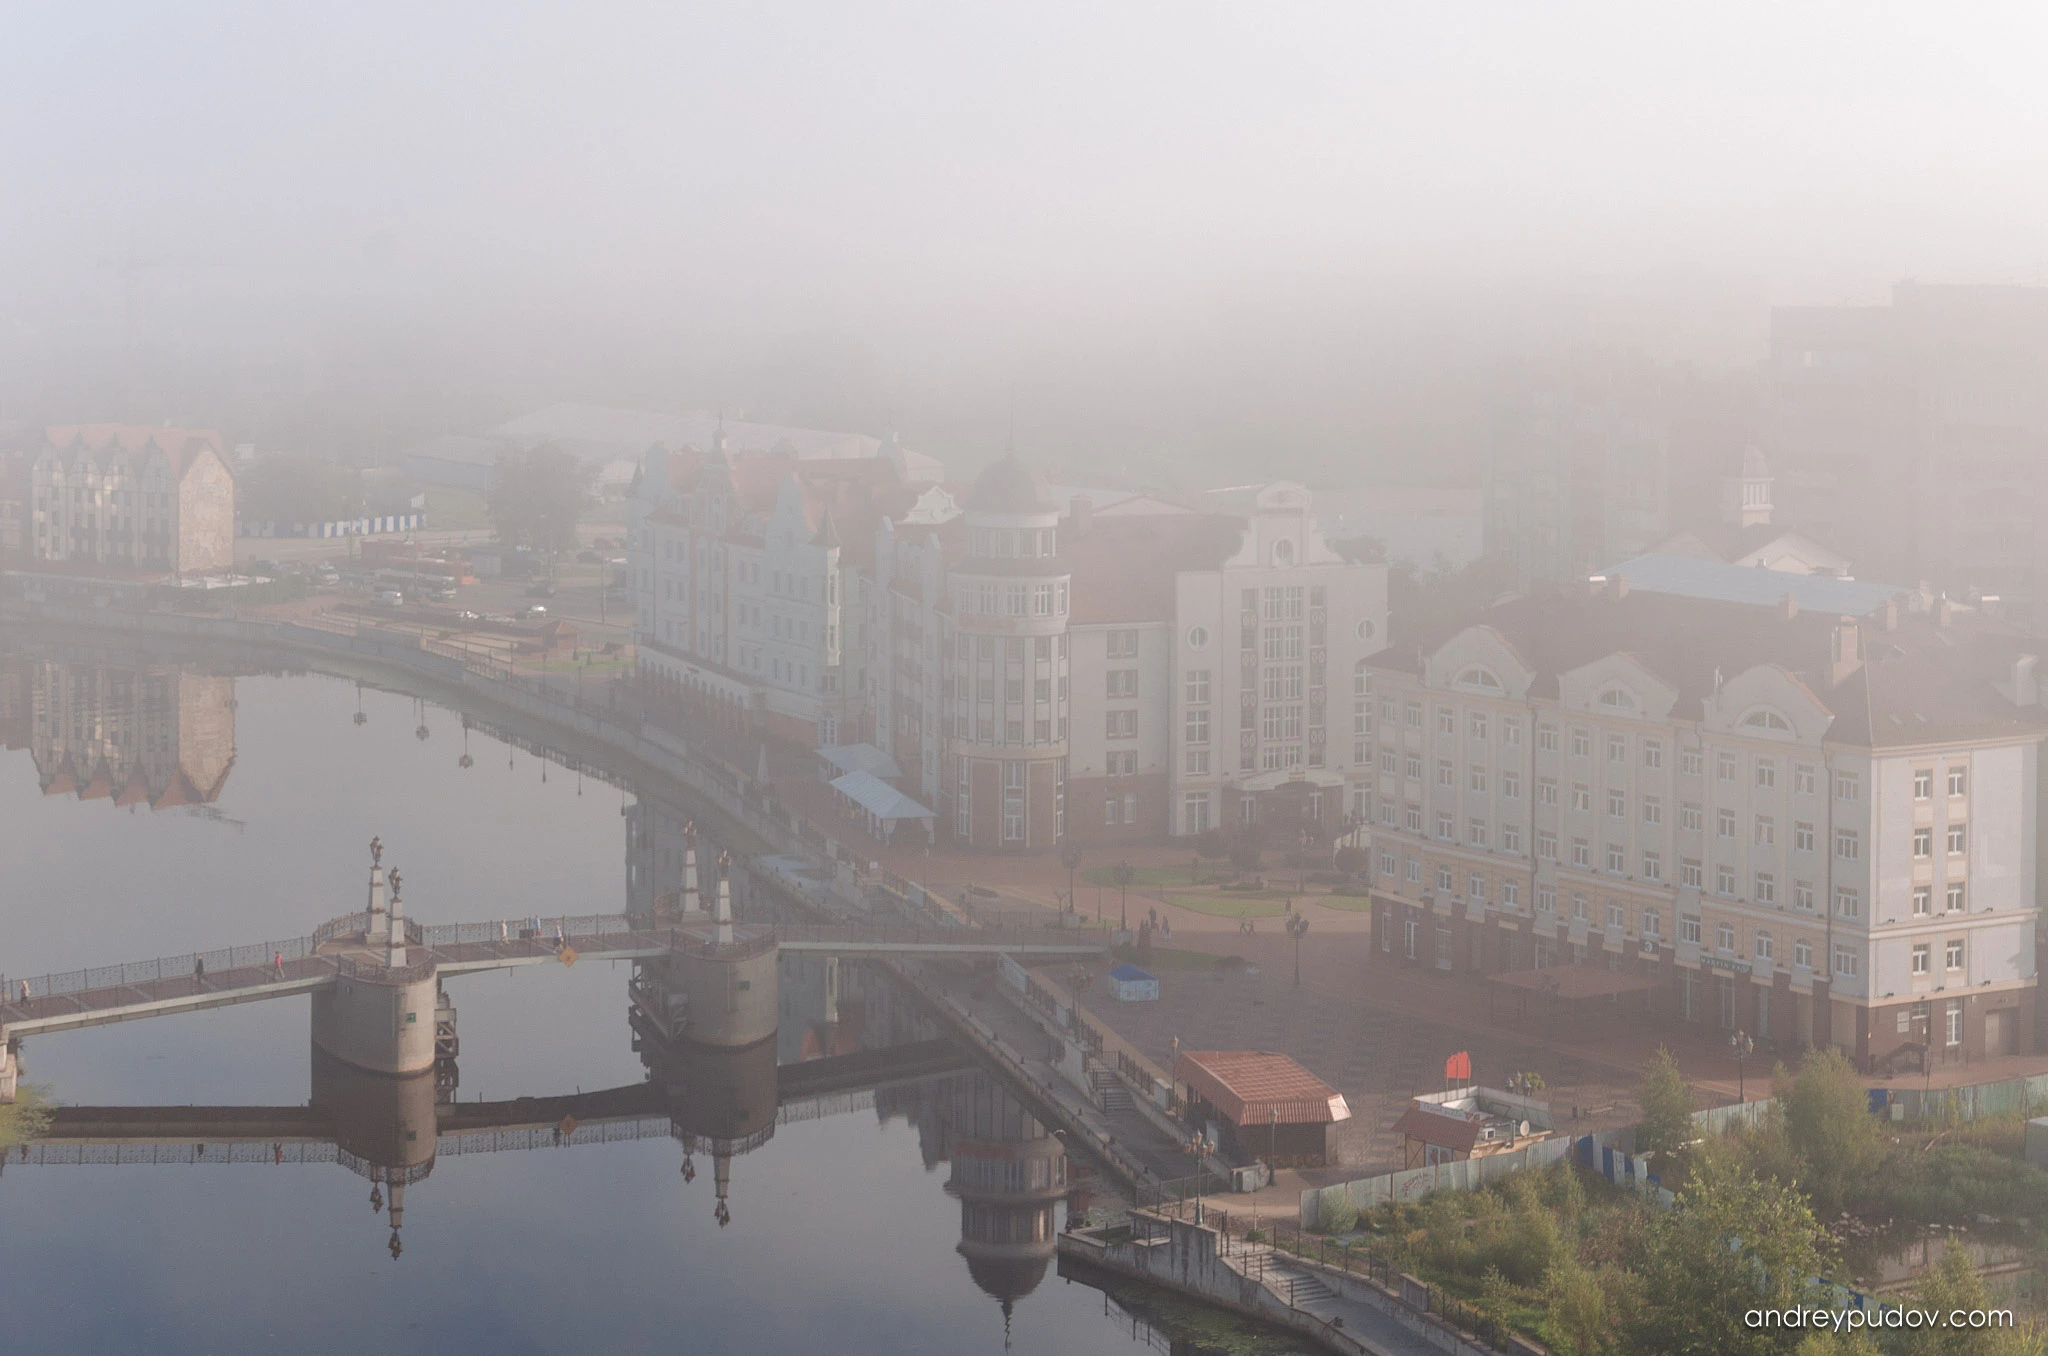 Andrey Pudov Kaliningrad. The amber capital of the World